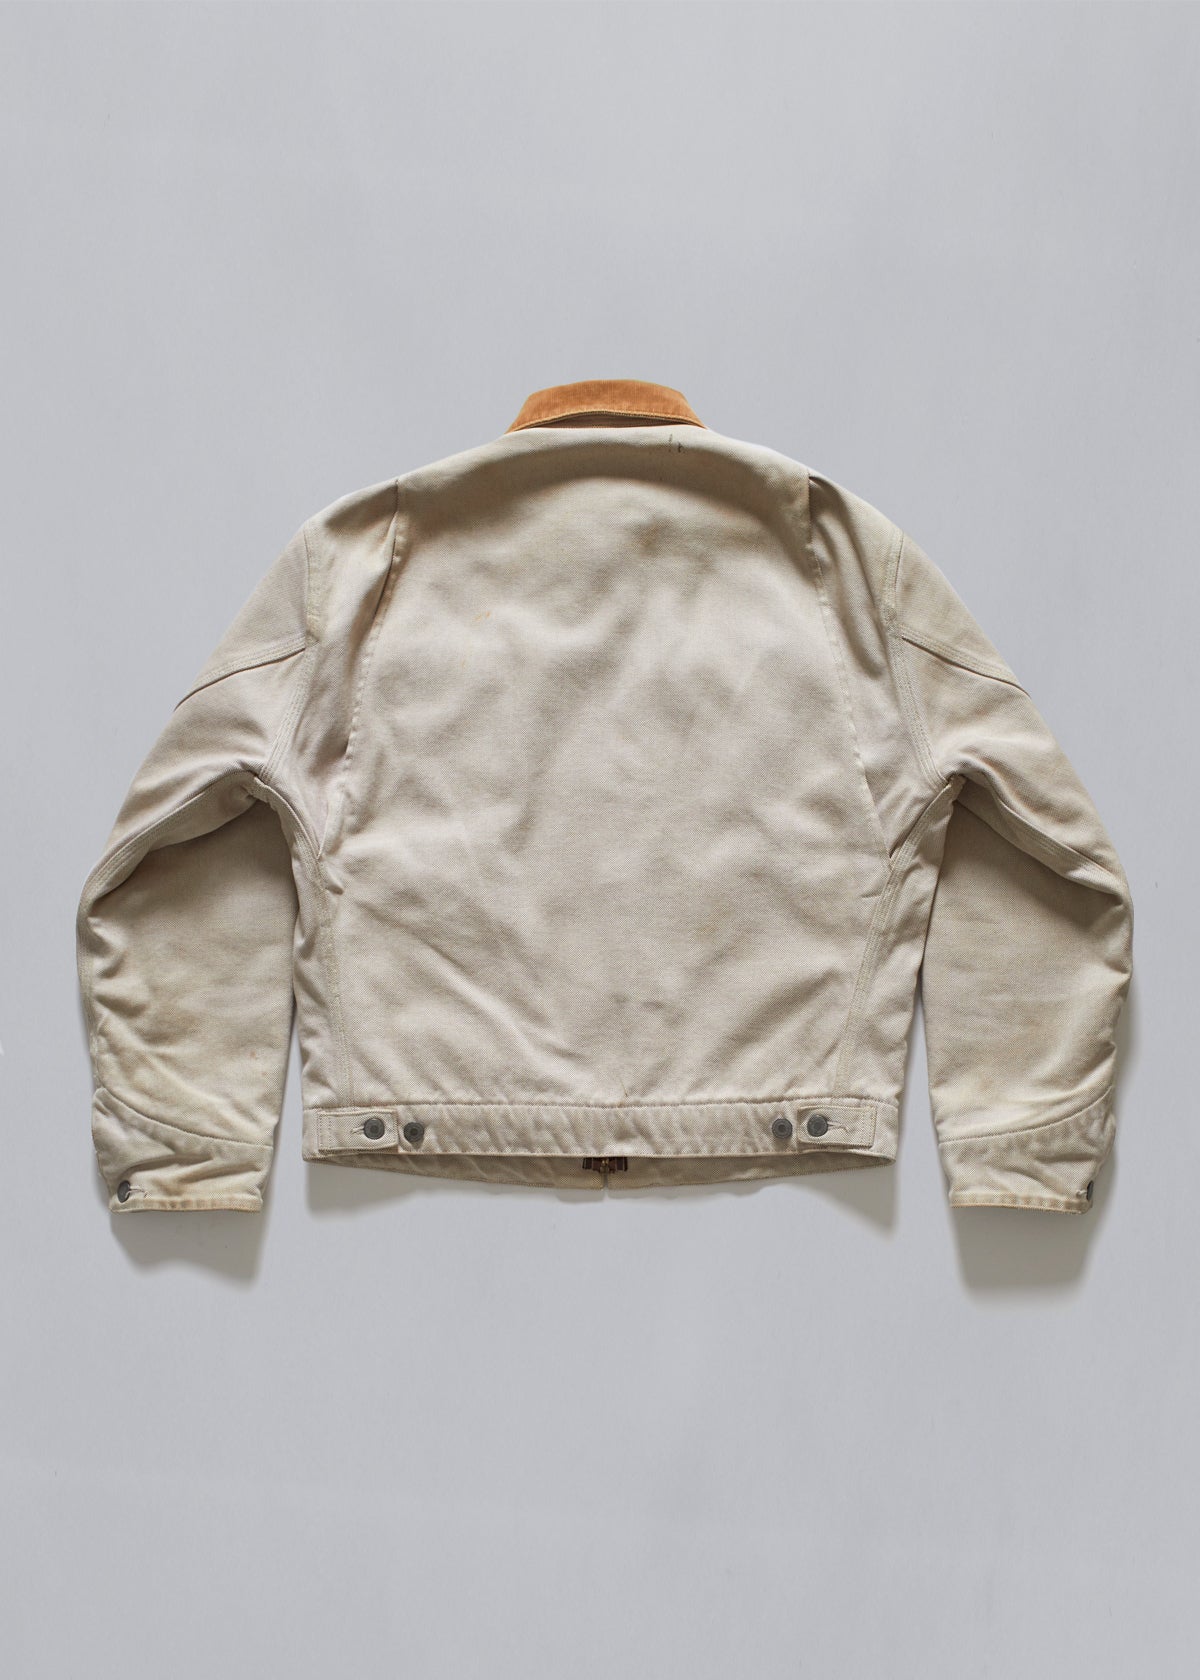 Detroit Jacket Parody Style 226 1997 - Medium - The Archivist Store